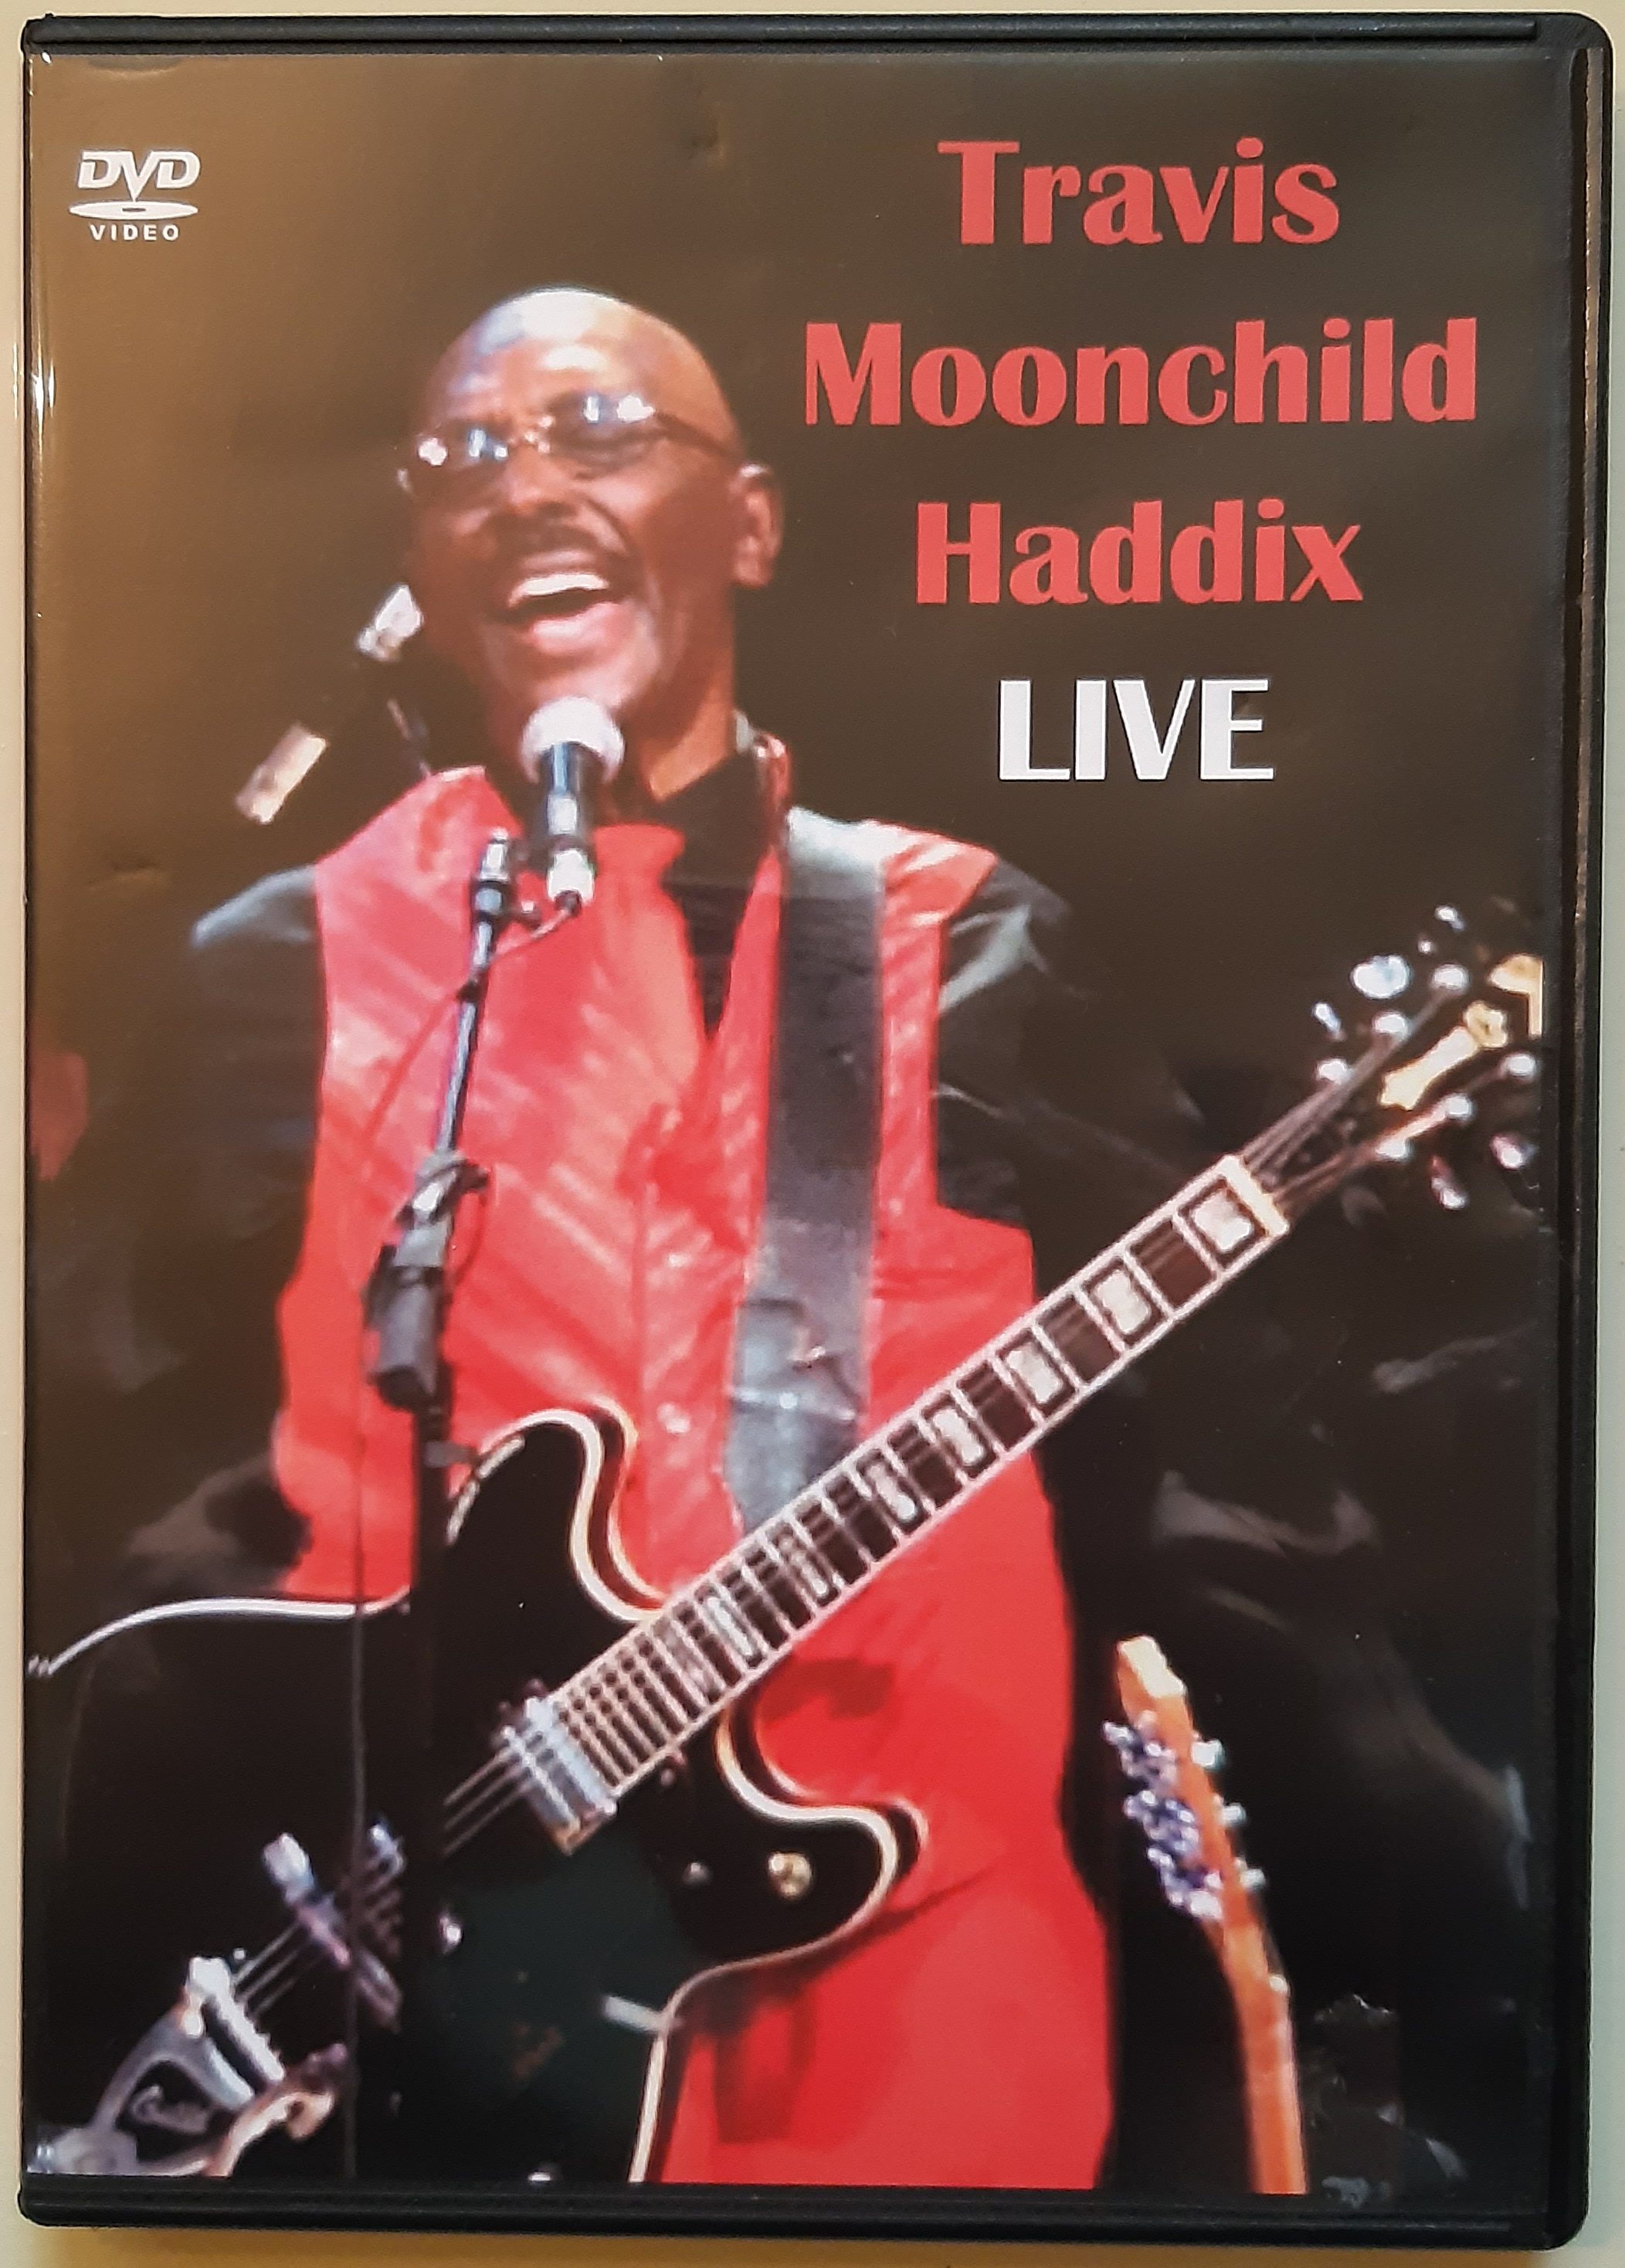 Travis Moonchild Haddix Live DVD